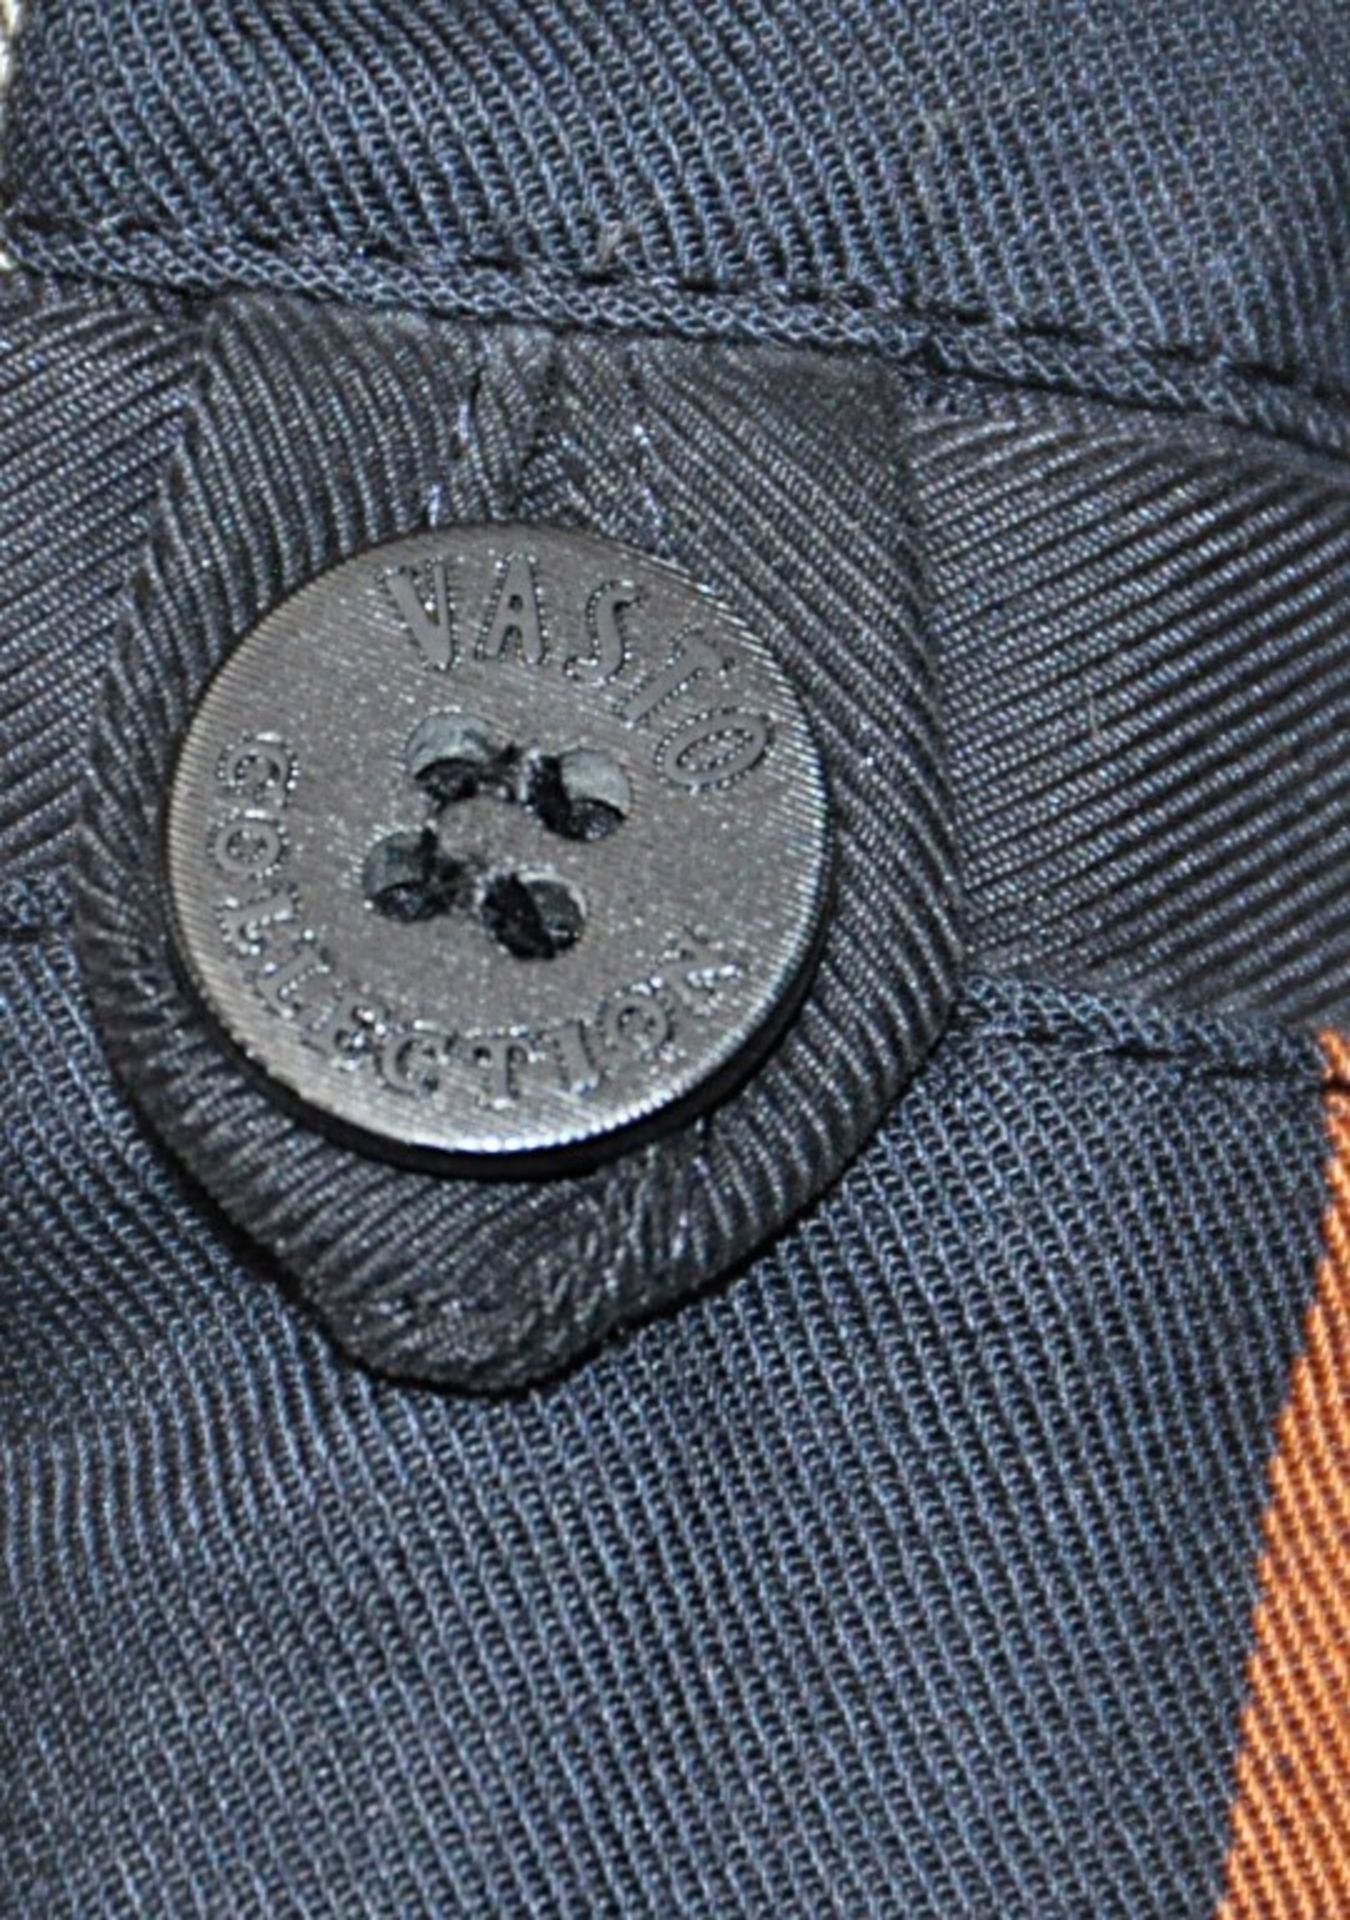 1 x Men's Long Sleeve Casual Jacket By International Luxury Brand "Vasto" (BAJ72241) – Size: Large – - Image 5 of 6